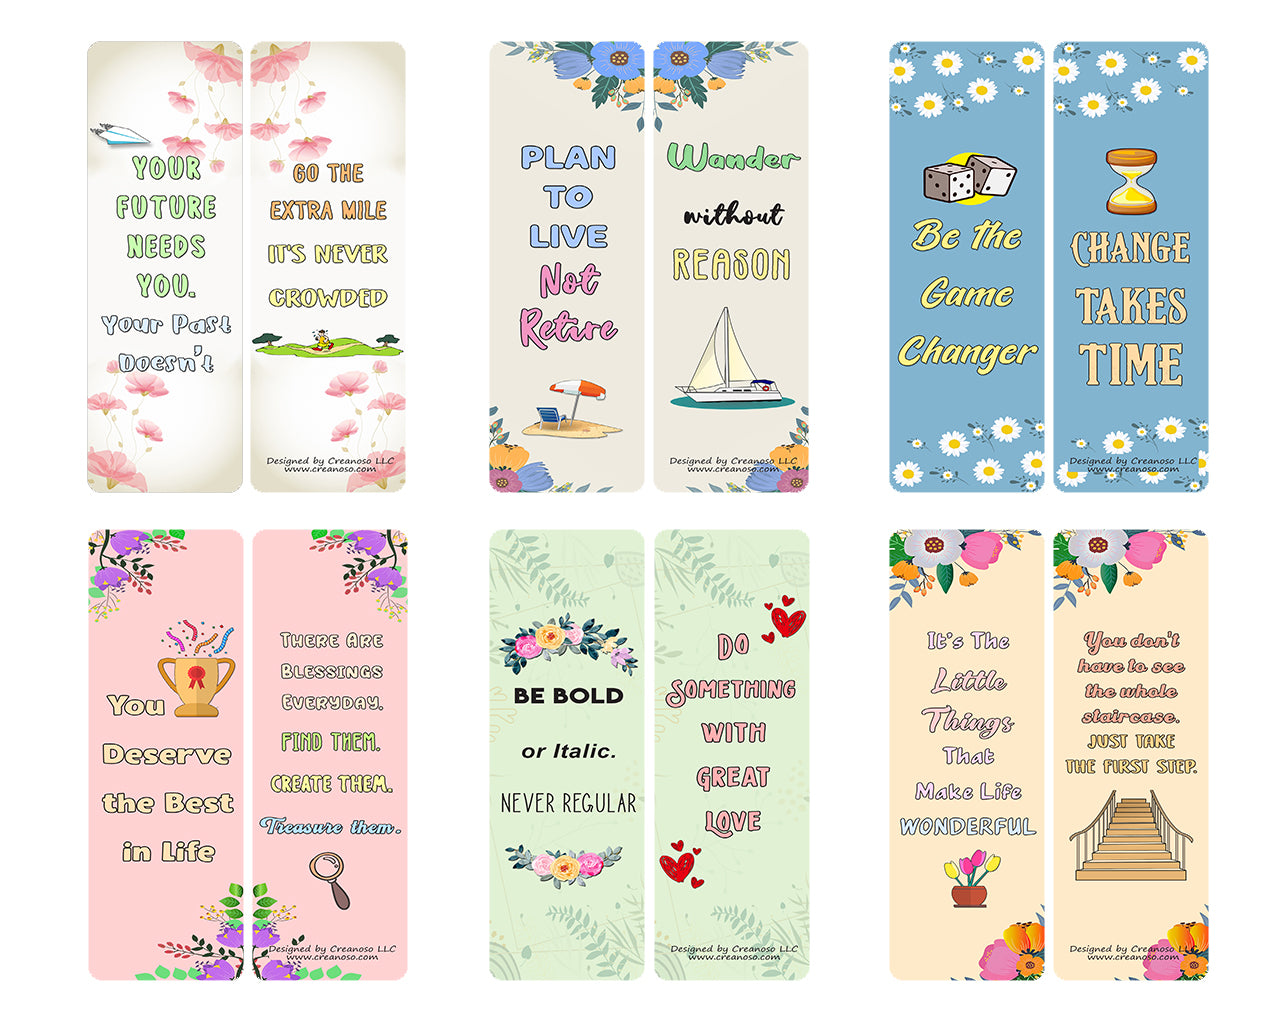 Floral Motivating Bookmarks Series 3 (12-Pack)